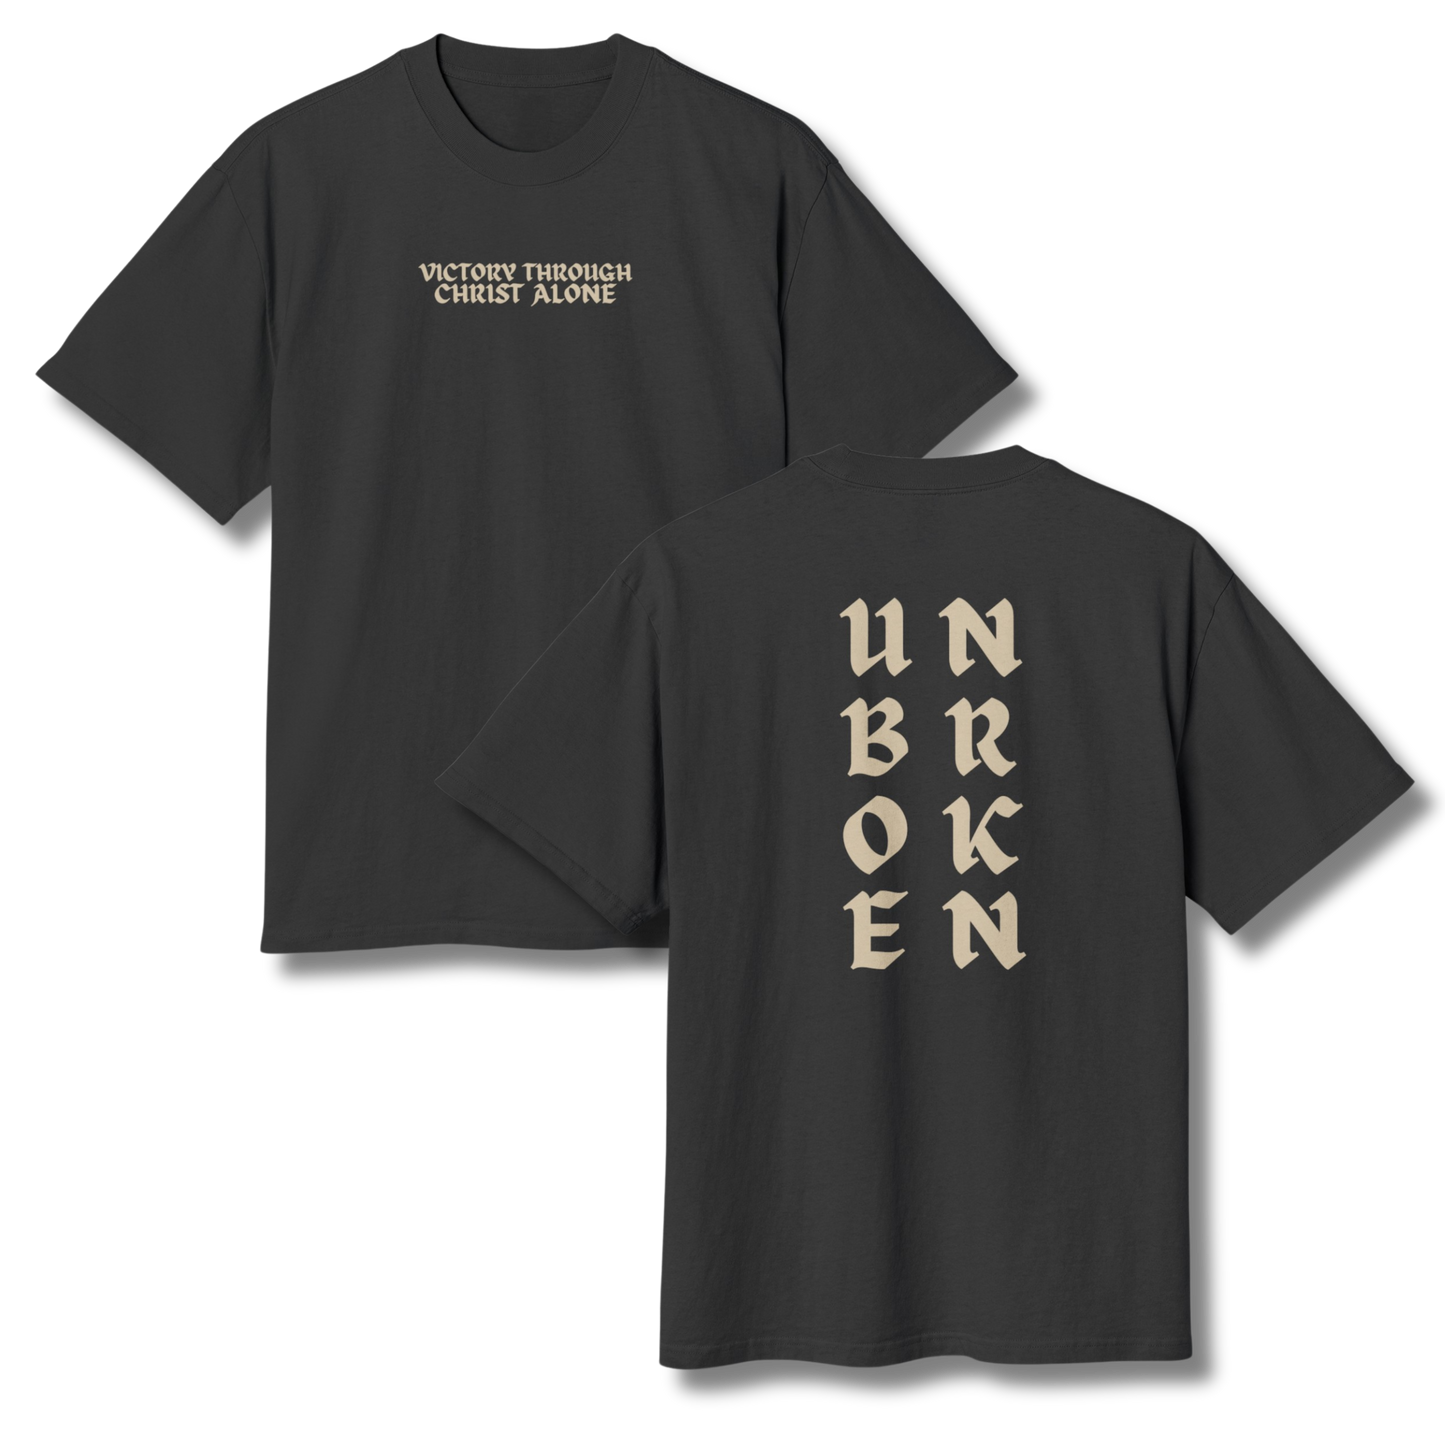 UNBROKEN VALY T-Shirt - Faded Black